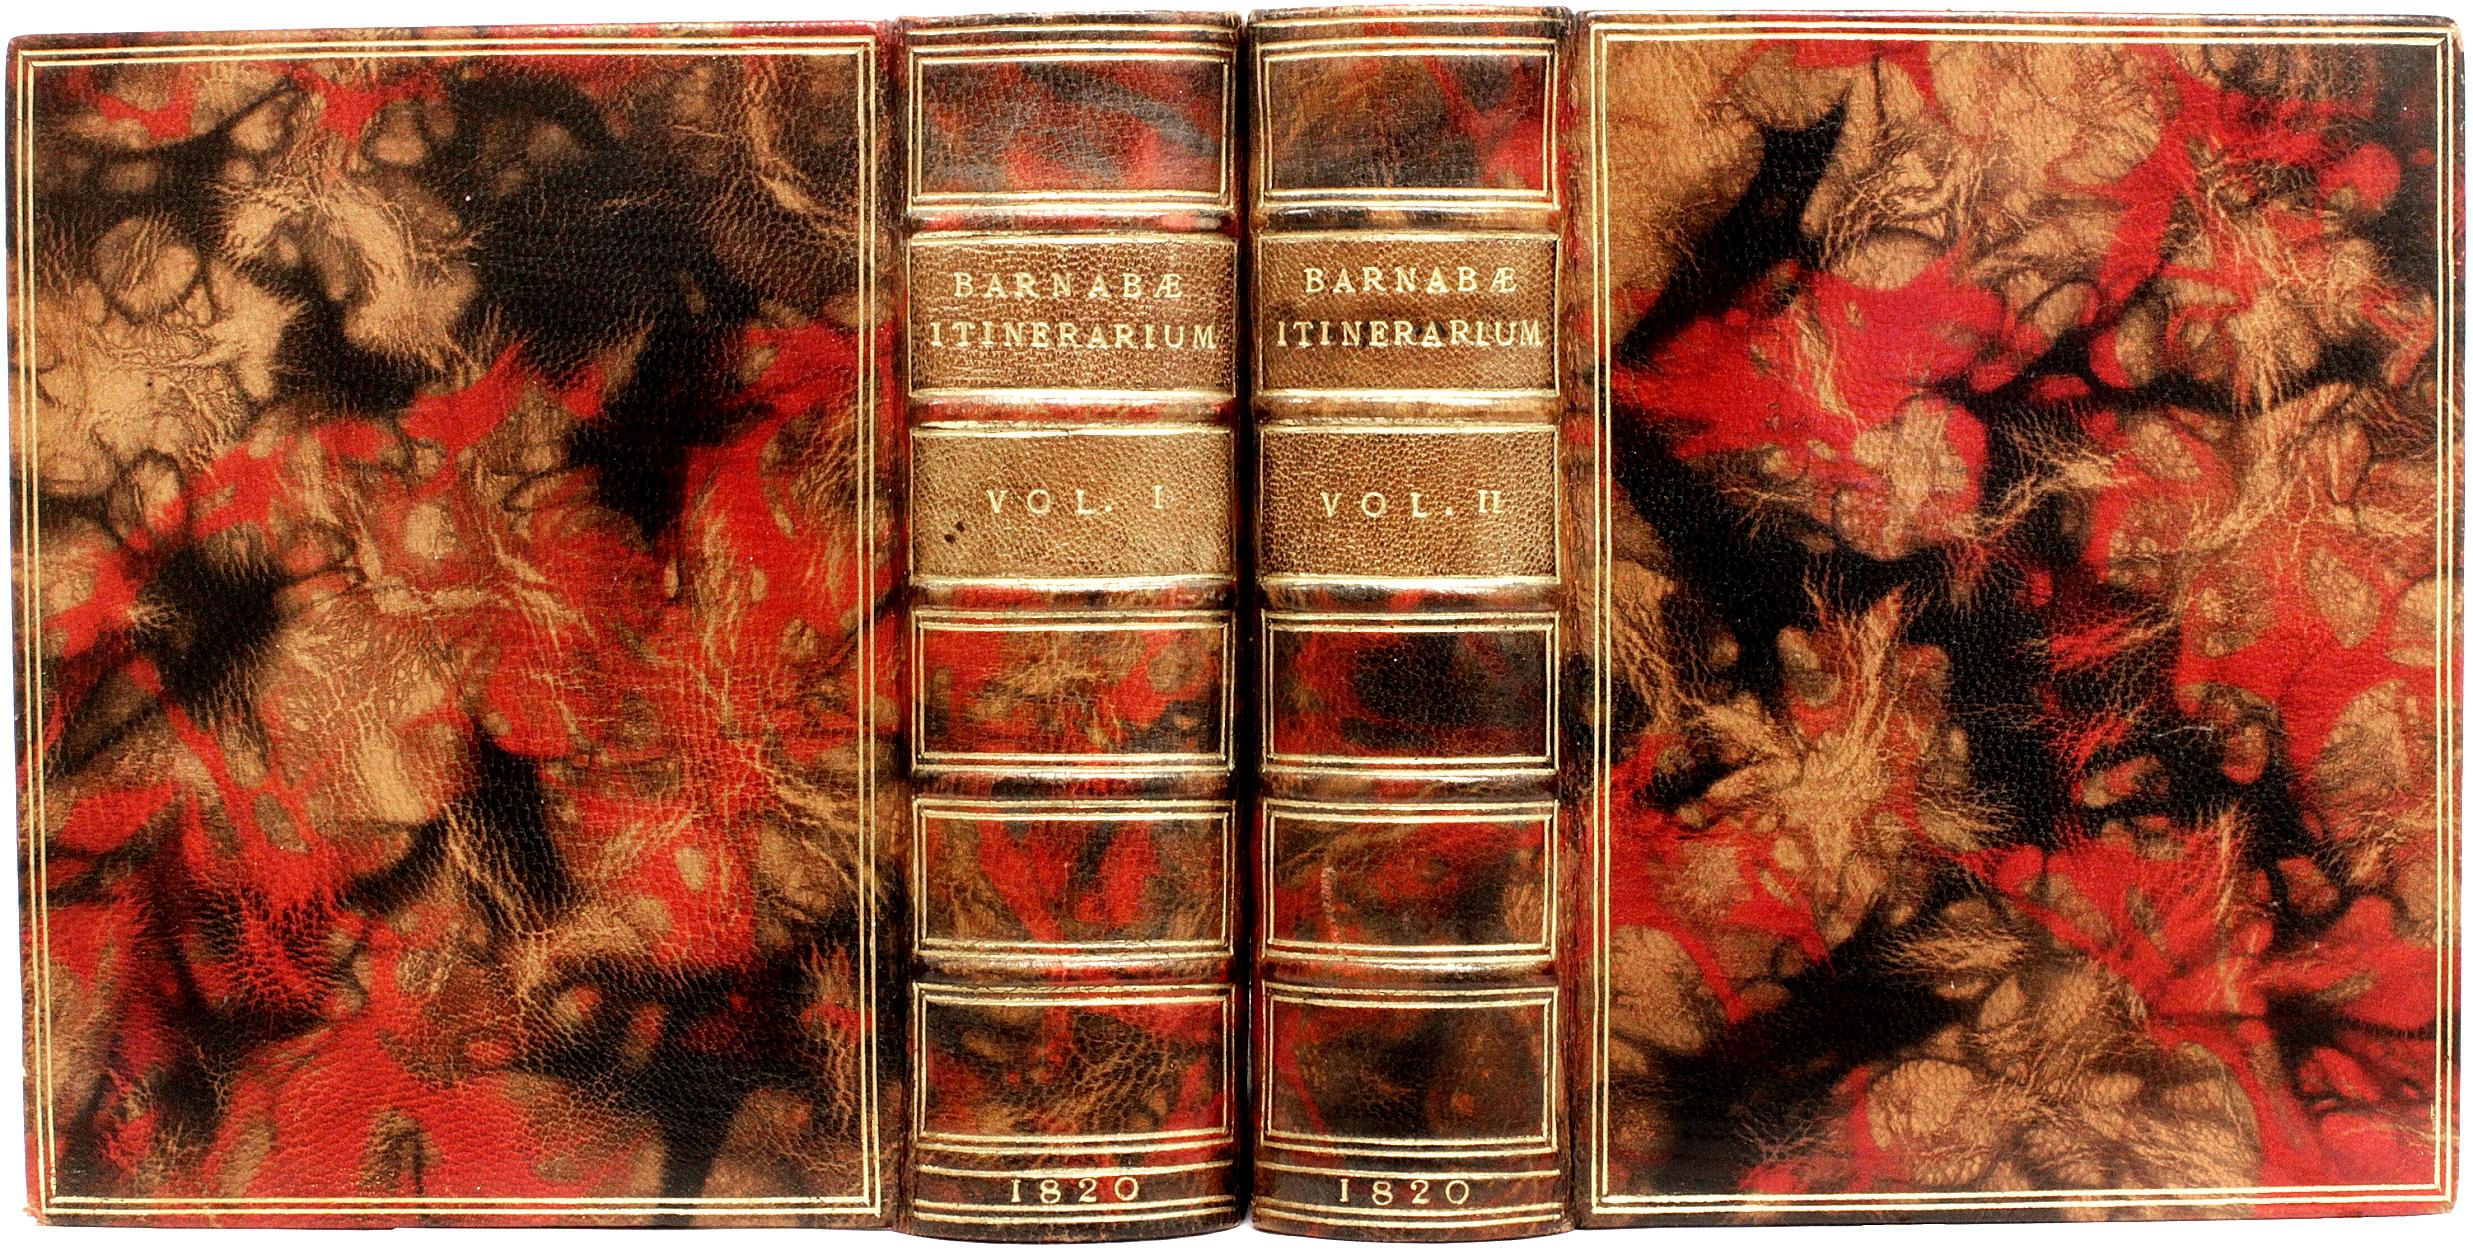 AUTHOR: BRATHWAIT, Richard (Joseph Haslewood - editor). 

TITLE: Barnabae Itenerarium, or Barnabee's Journal.

PUBLISHER: London: Np, 1820.

DESCRIPTION: 2 vols., l6mo, 5-1/8